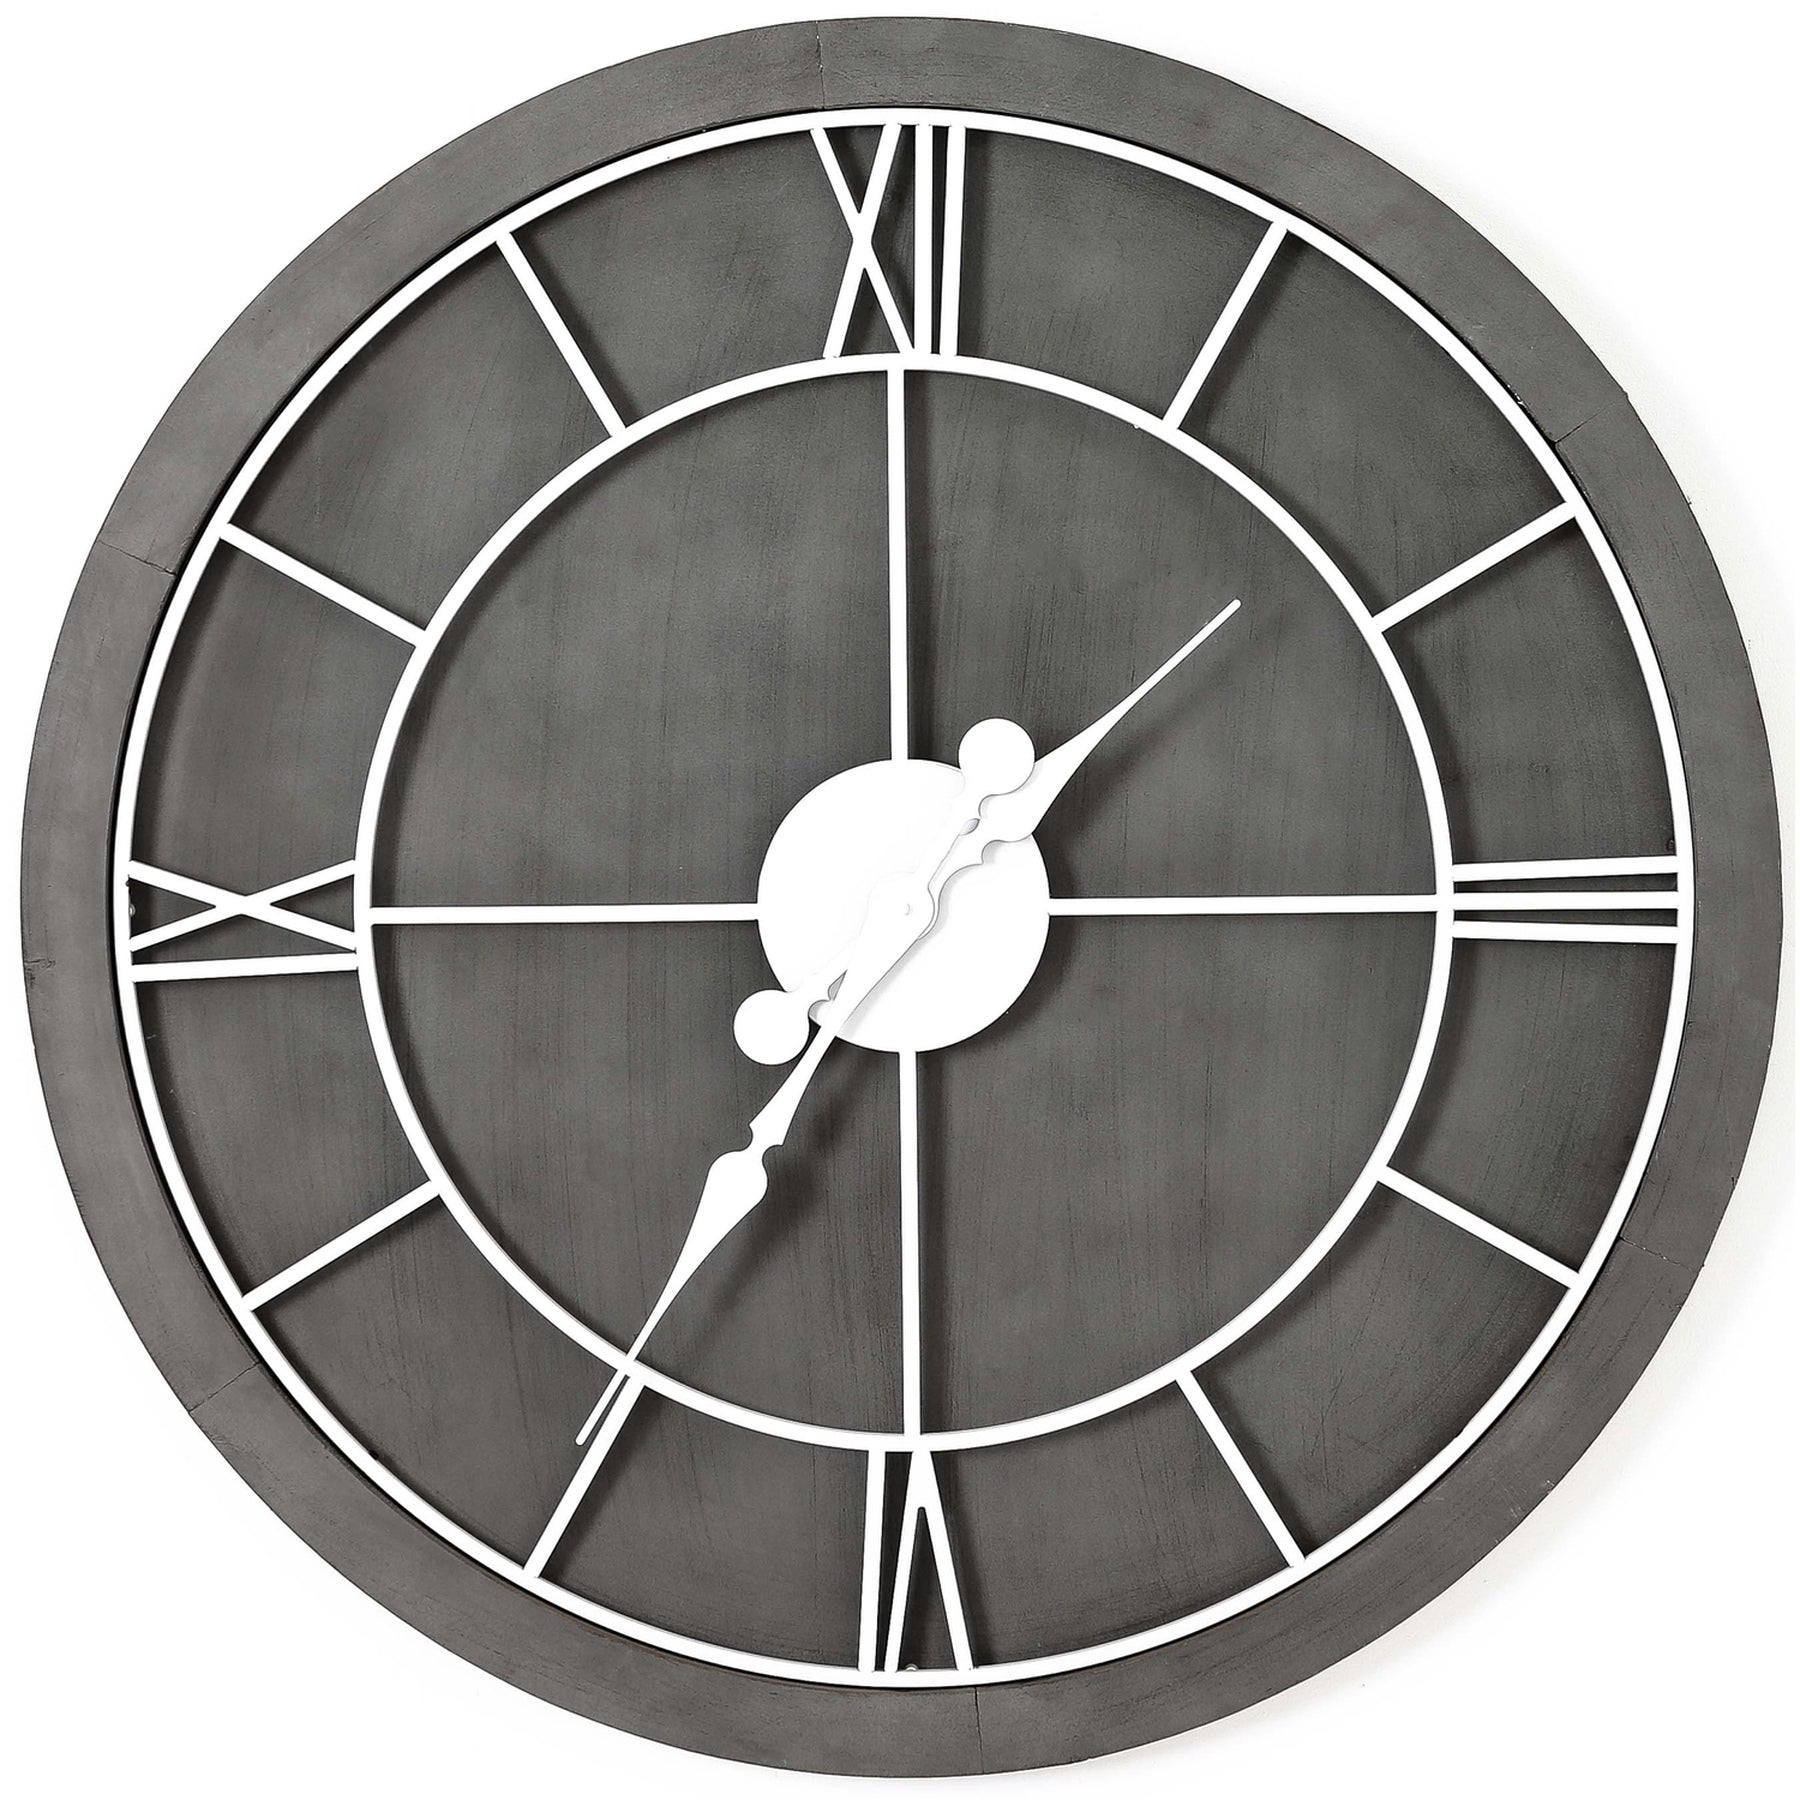 View Williston Grey Wall Clock information